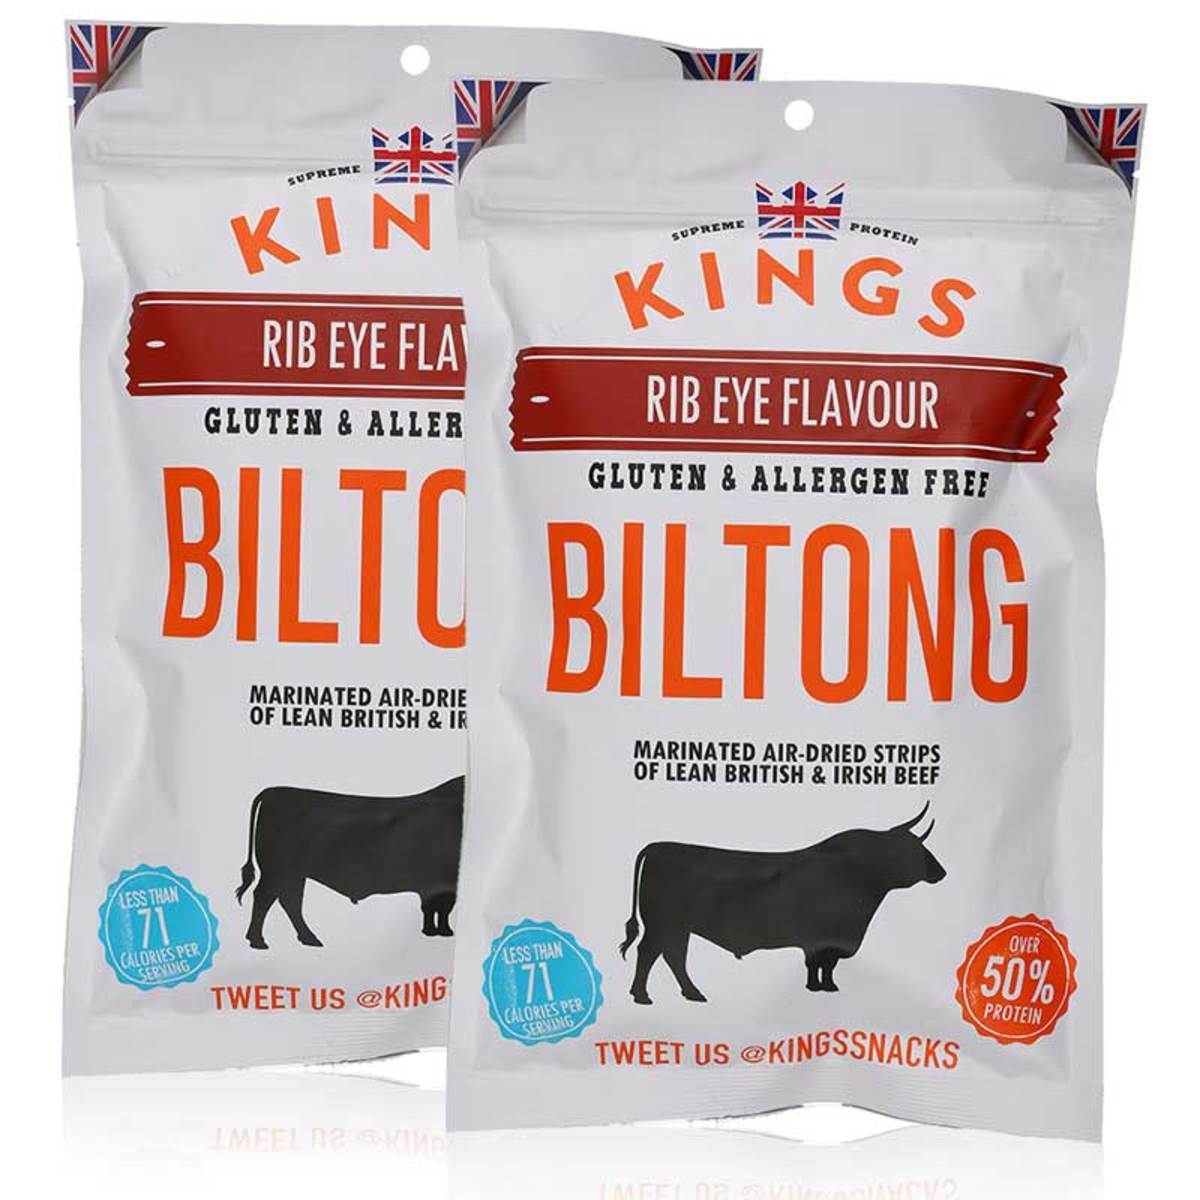 Kings Beef Biltong - Rib Eye Flavour, 2 x 300g Titan Packs